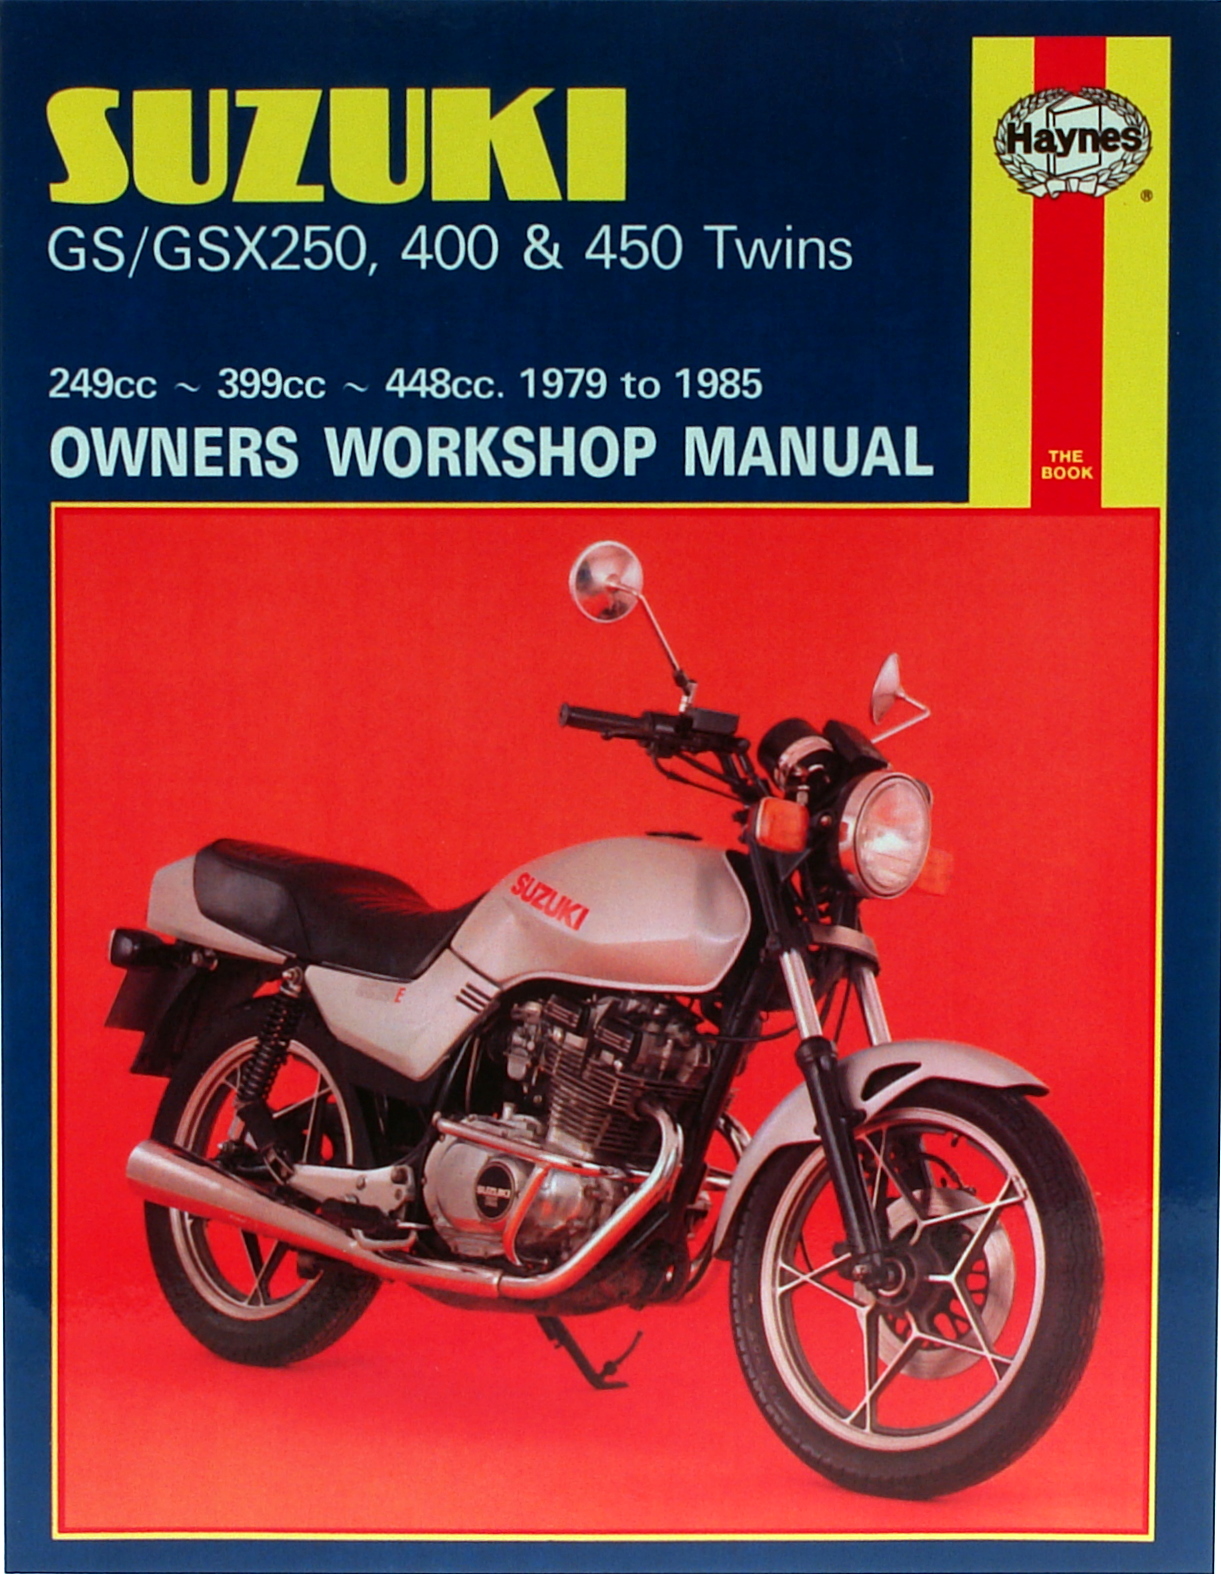 service & repair 68-78 Haynes Manual 0120 workshop Suzuki 250 & 350 Twins 